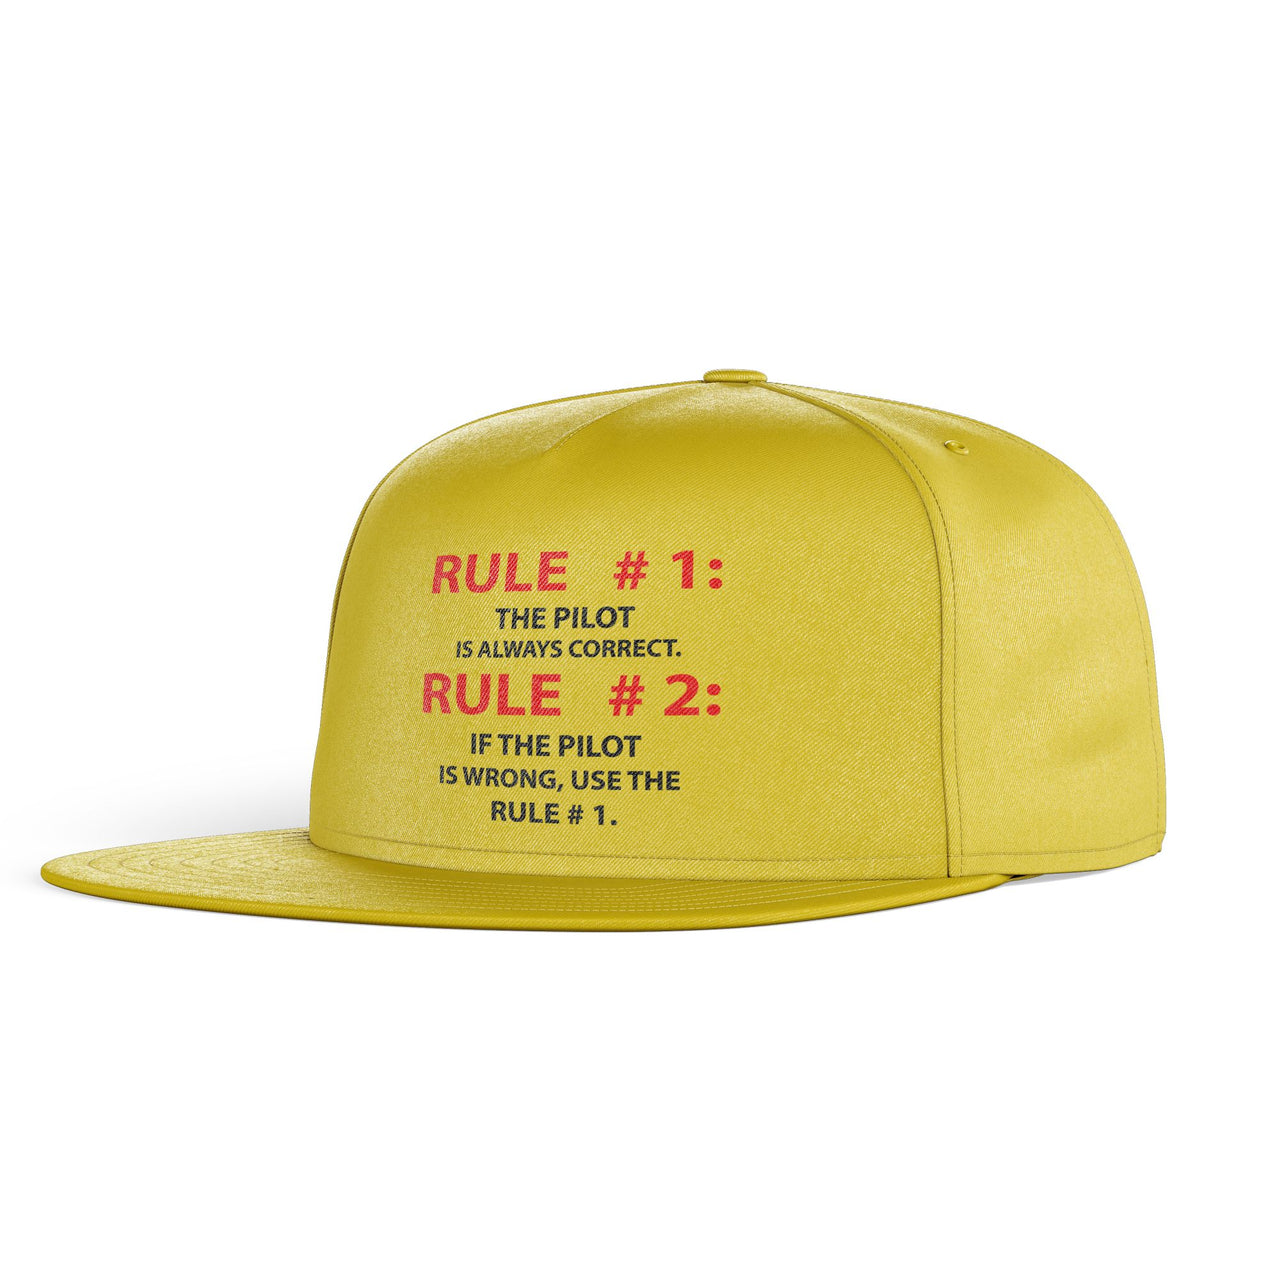 Rule 1 - Pilot is Always Correct Designed Snapback Caps & Hats